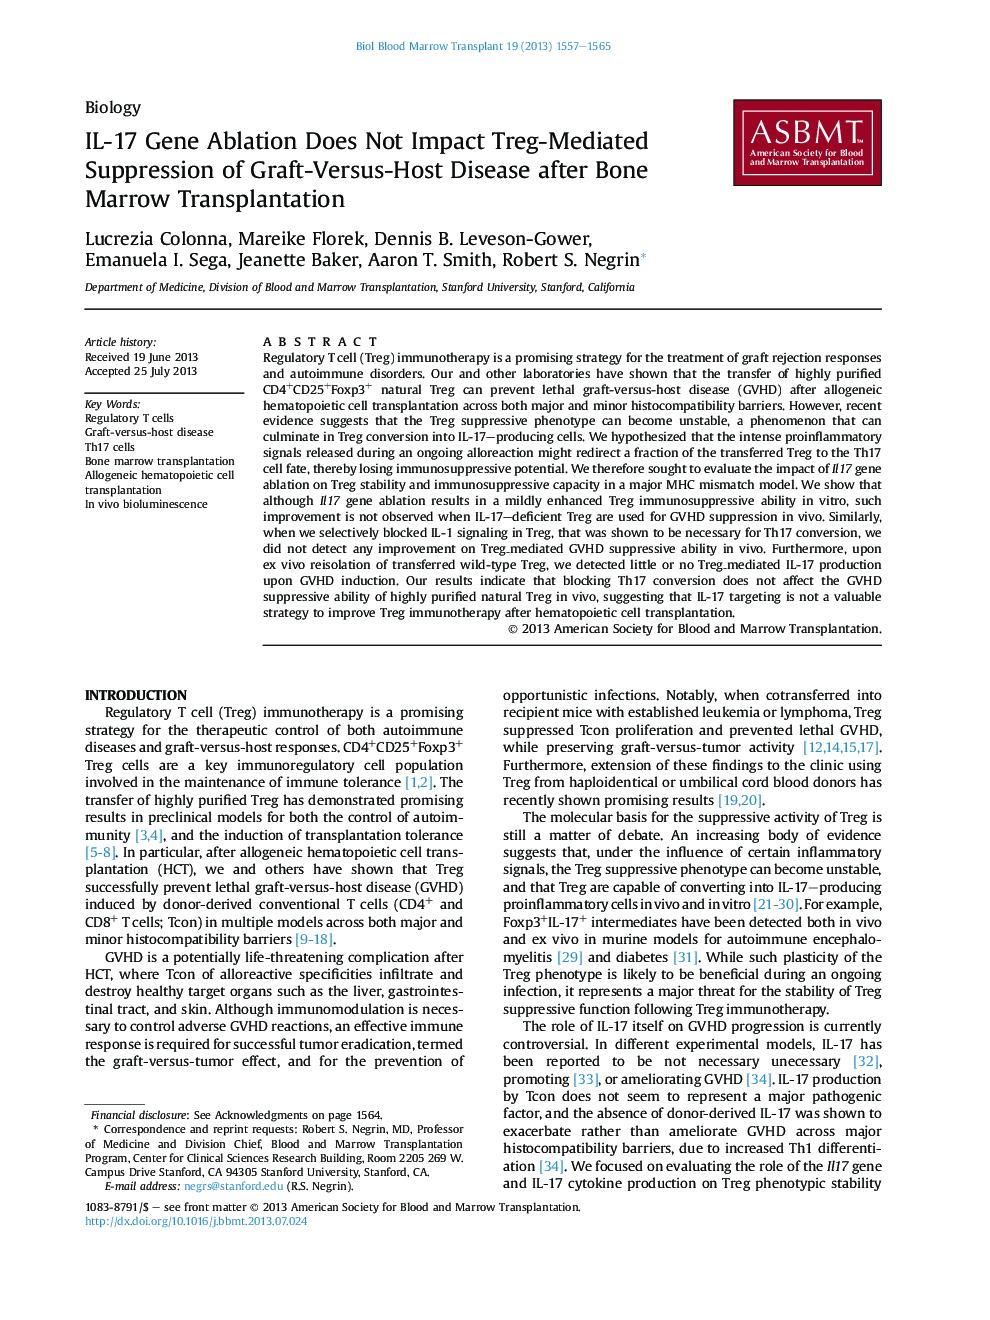 IL-17 Gene Ablation Does Not Impact Treg-Mediated Suppression of Graft-Versus-Host Disease after Bone Marrow Transplantation 